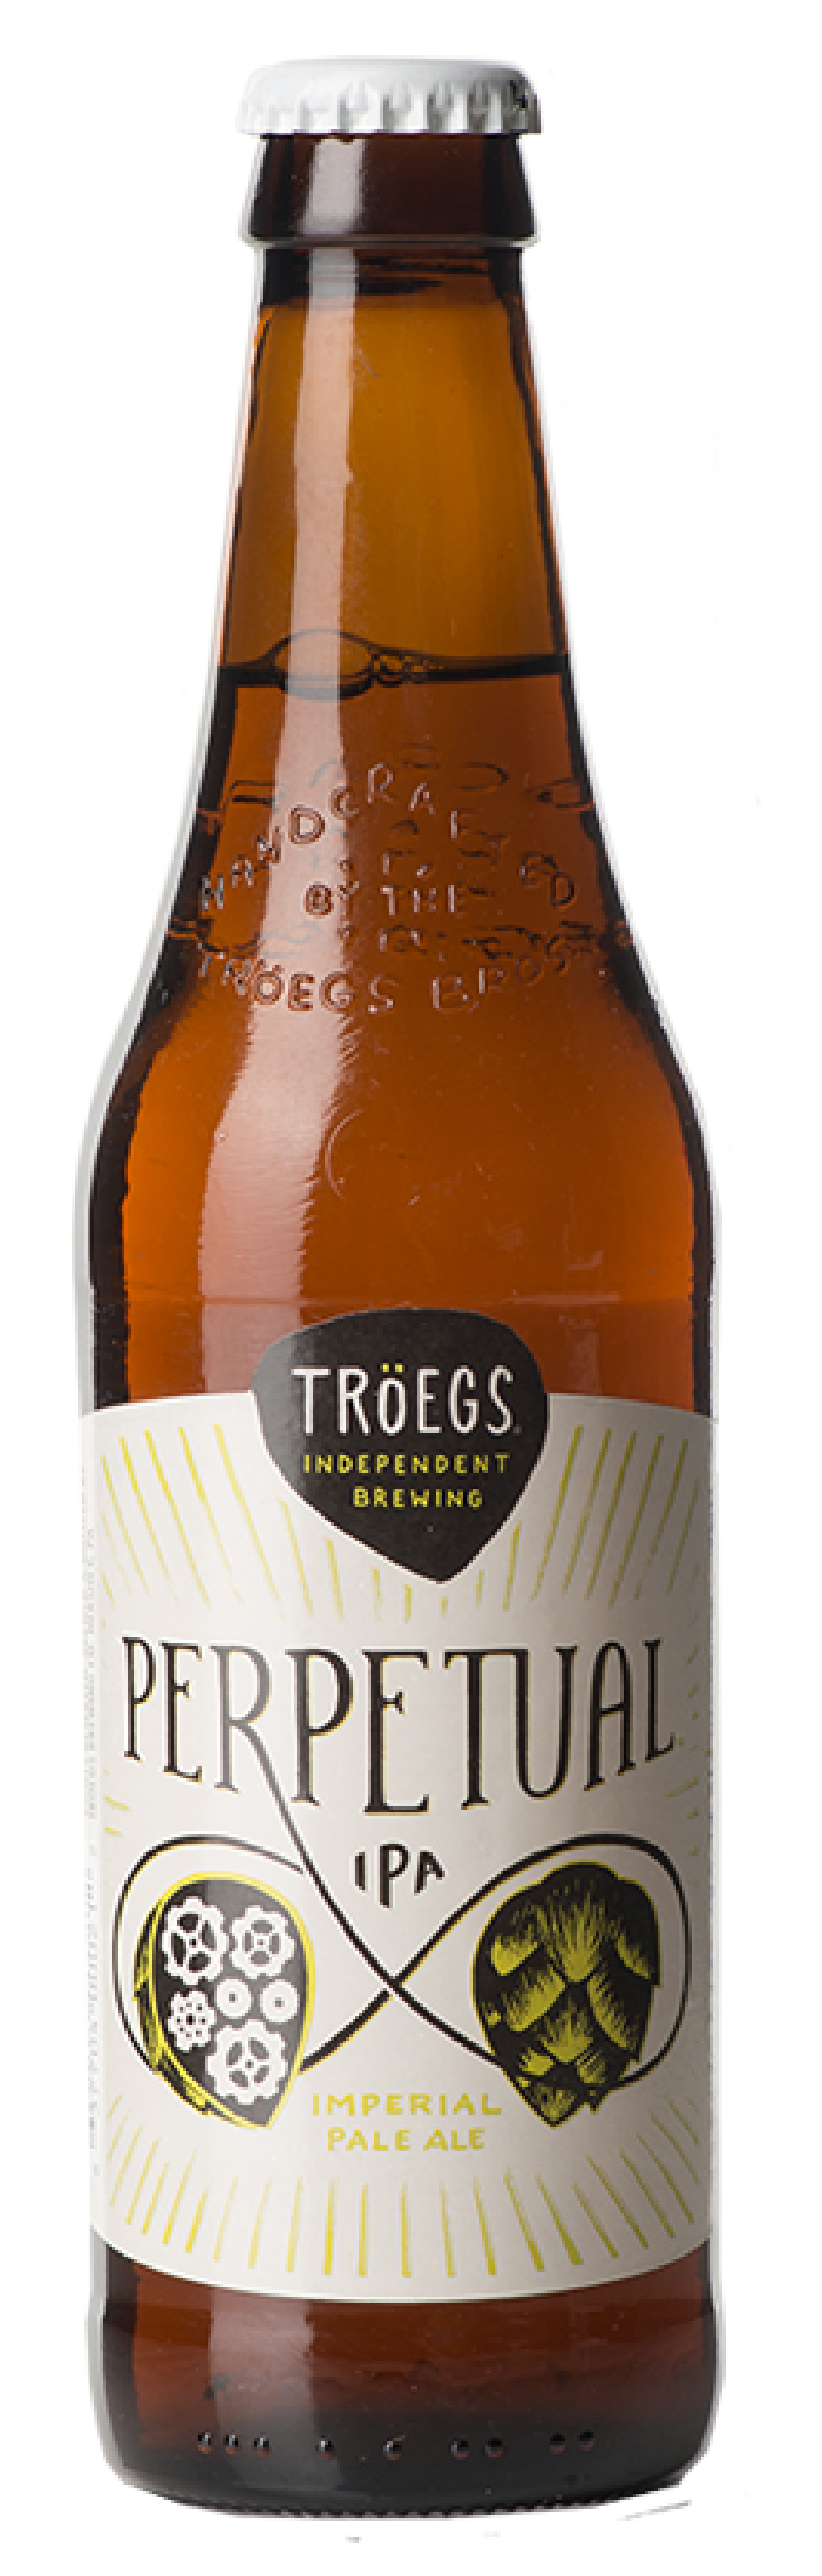 Perpetual IPA - Tröegs Independent Brewing